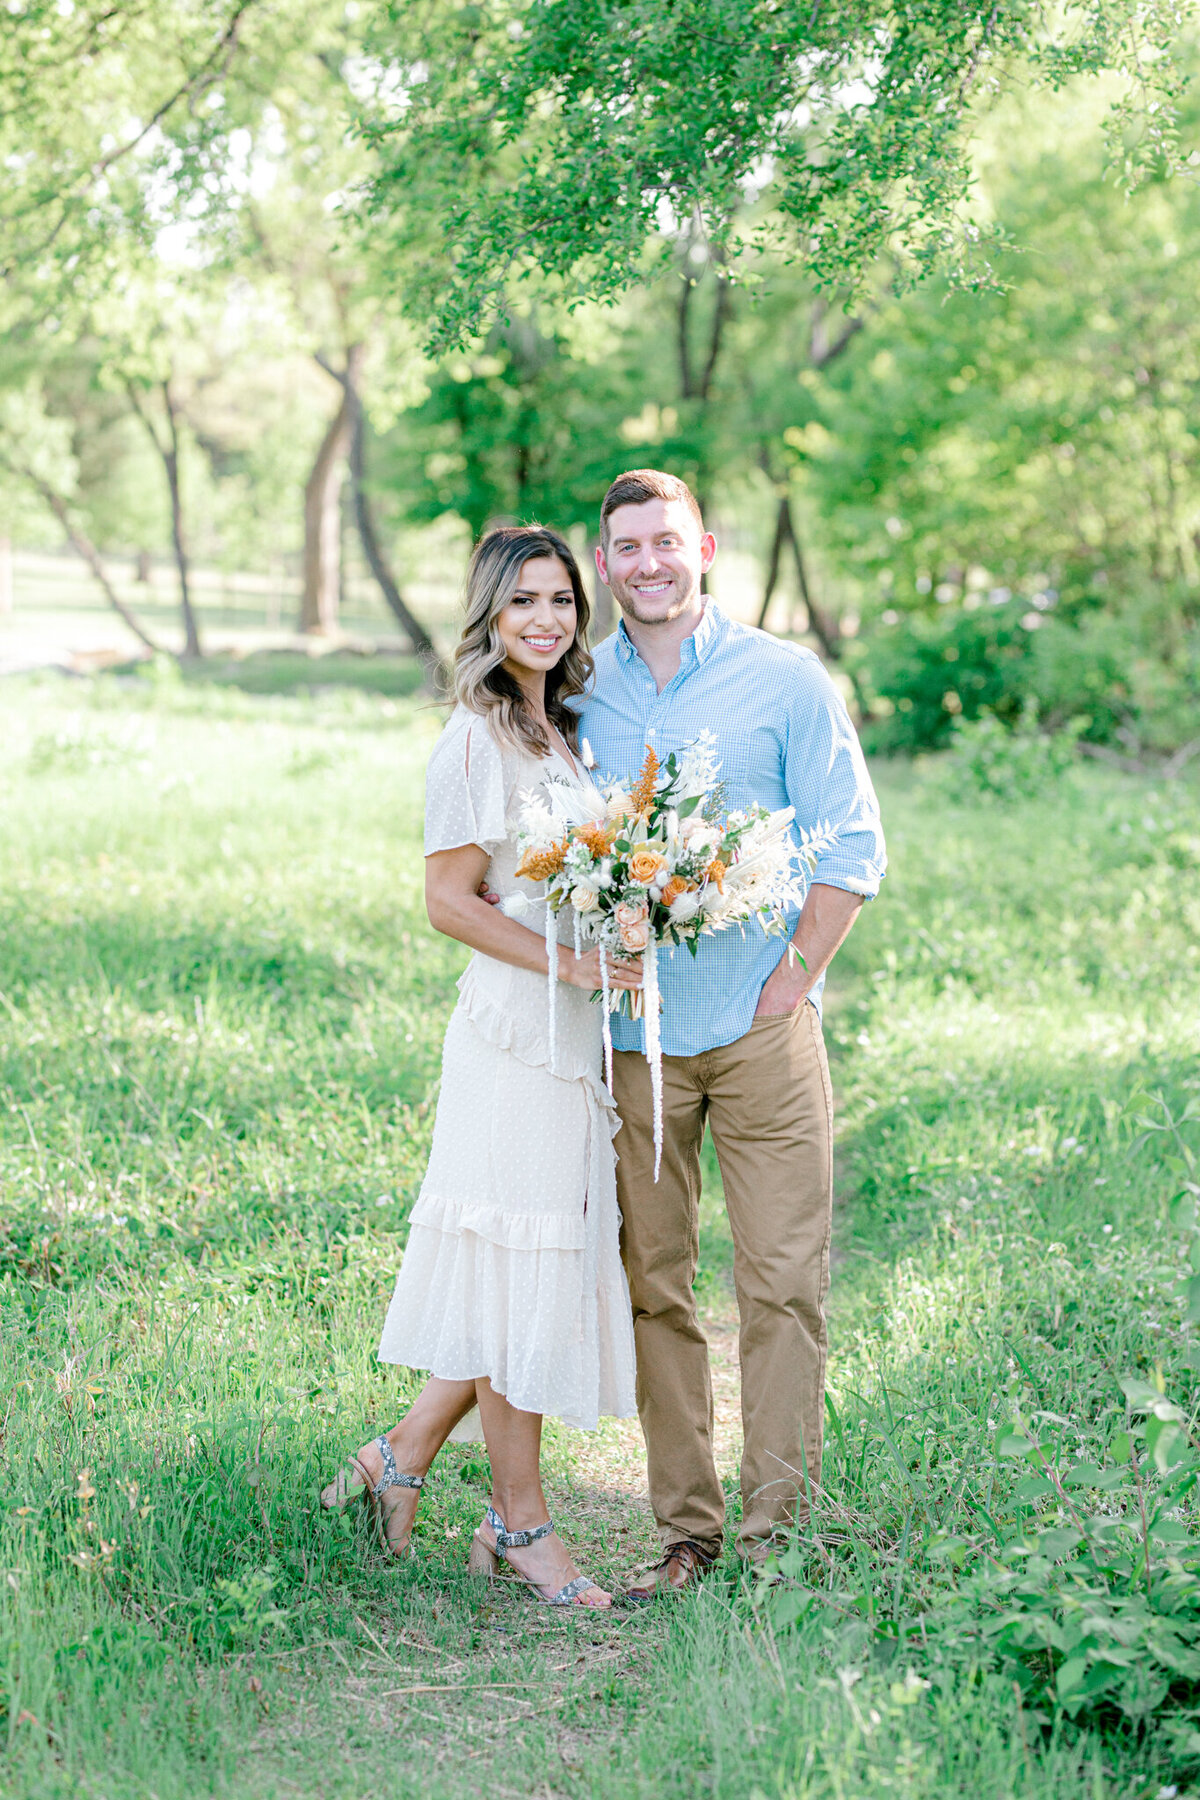 Anna & Brendan White Rock Lake Engagement Session | Dallas Wedding Photographer | Sami Kathryn Photography-1